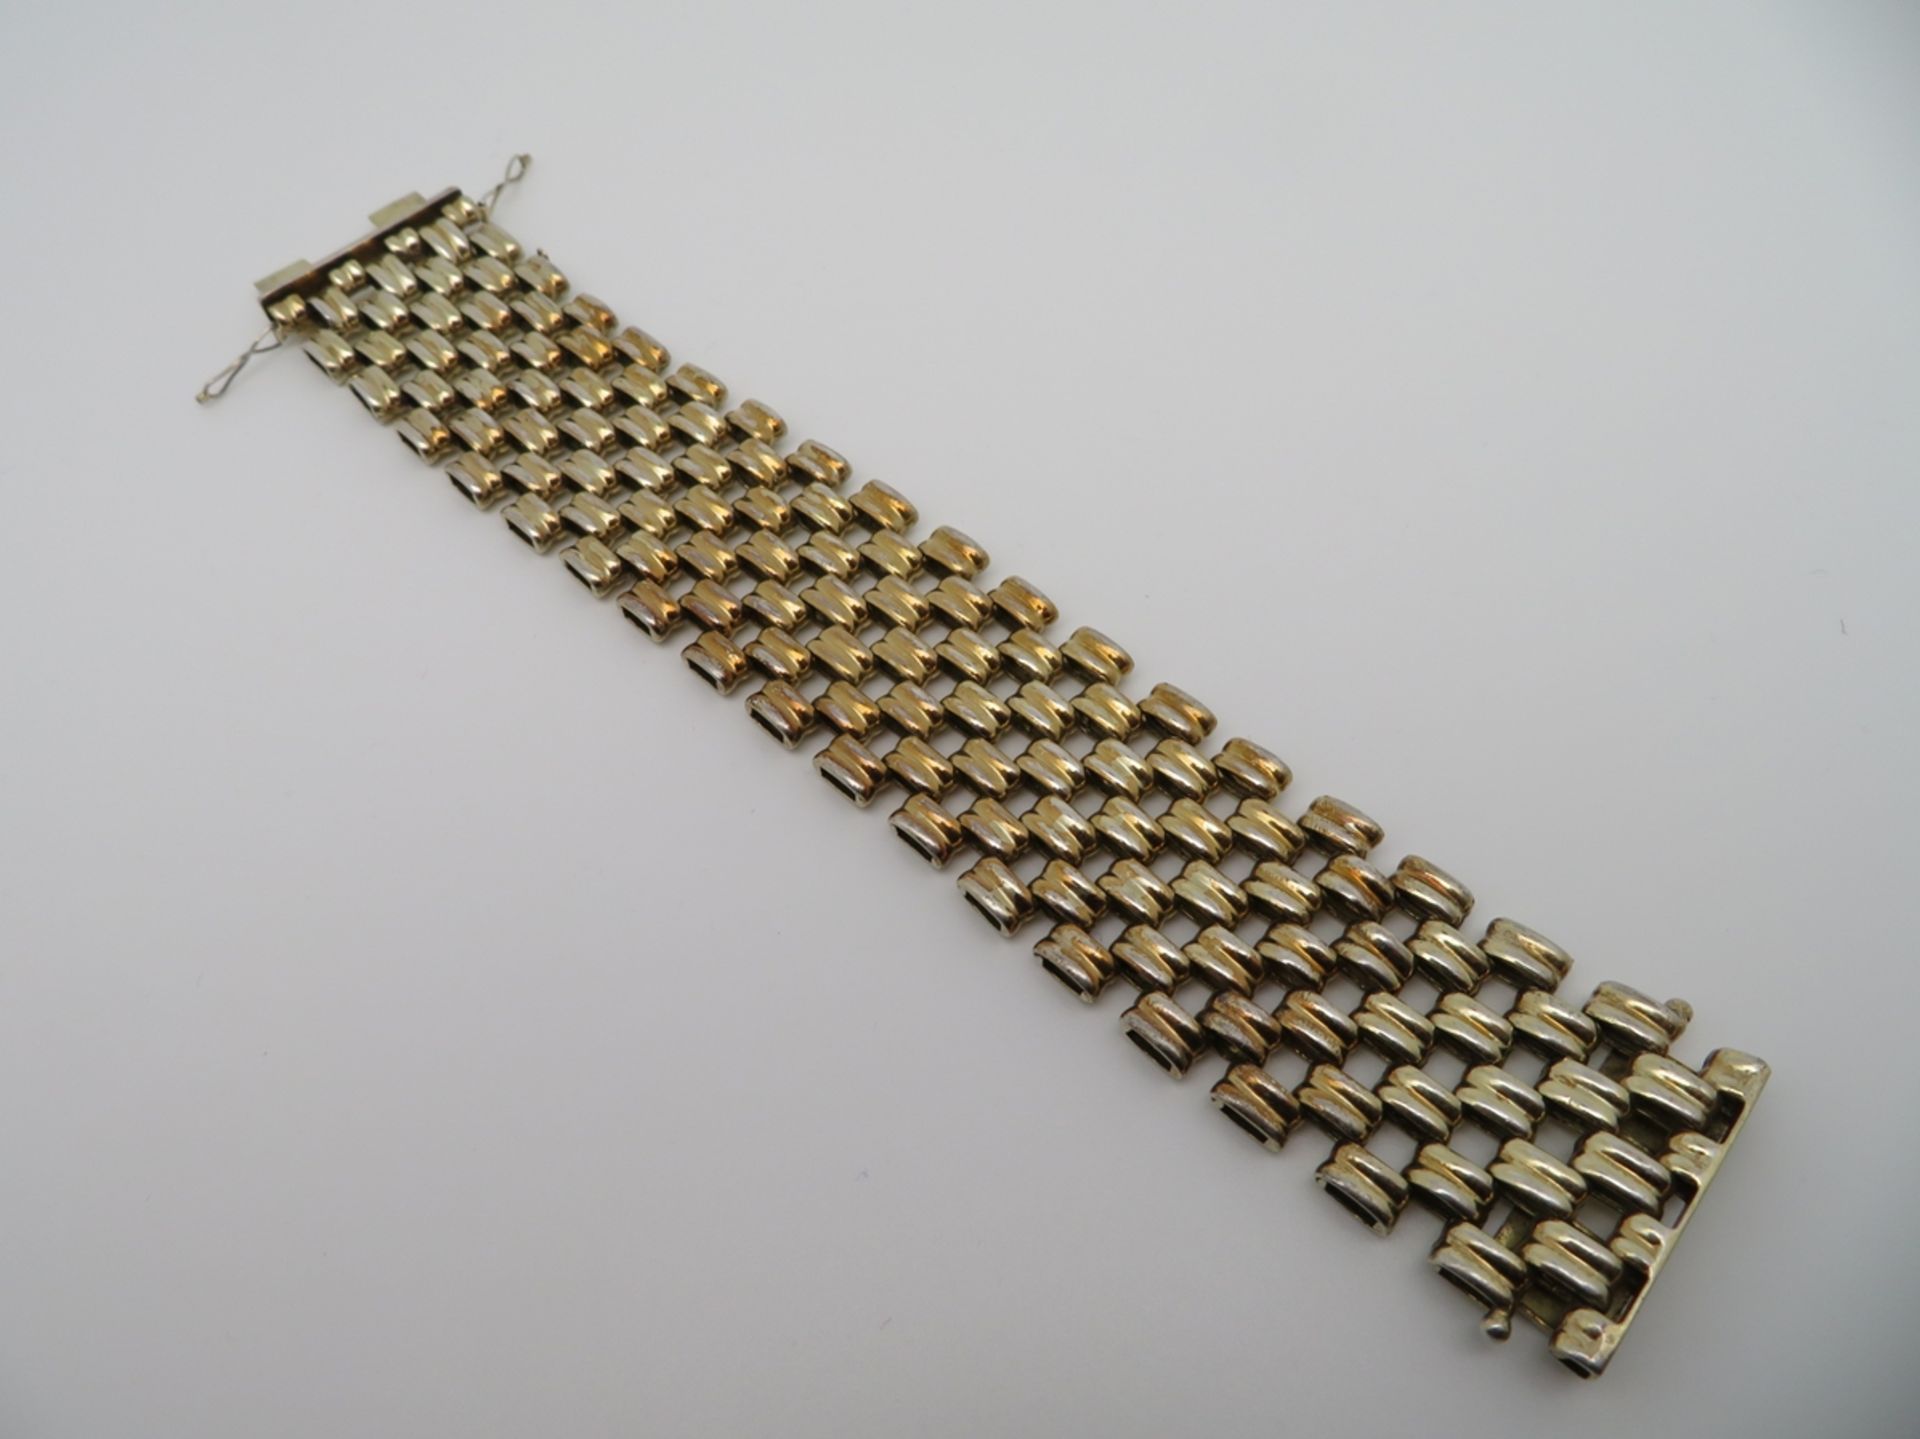 Armband, 1970/80er Jahre, 835er Silber, vergoldet, 61 g, 20 x 3,2 cm.